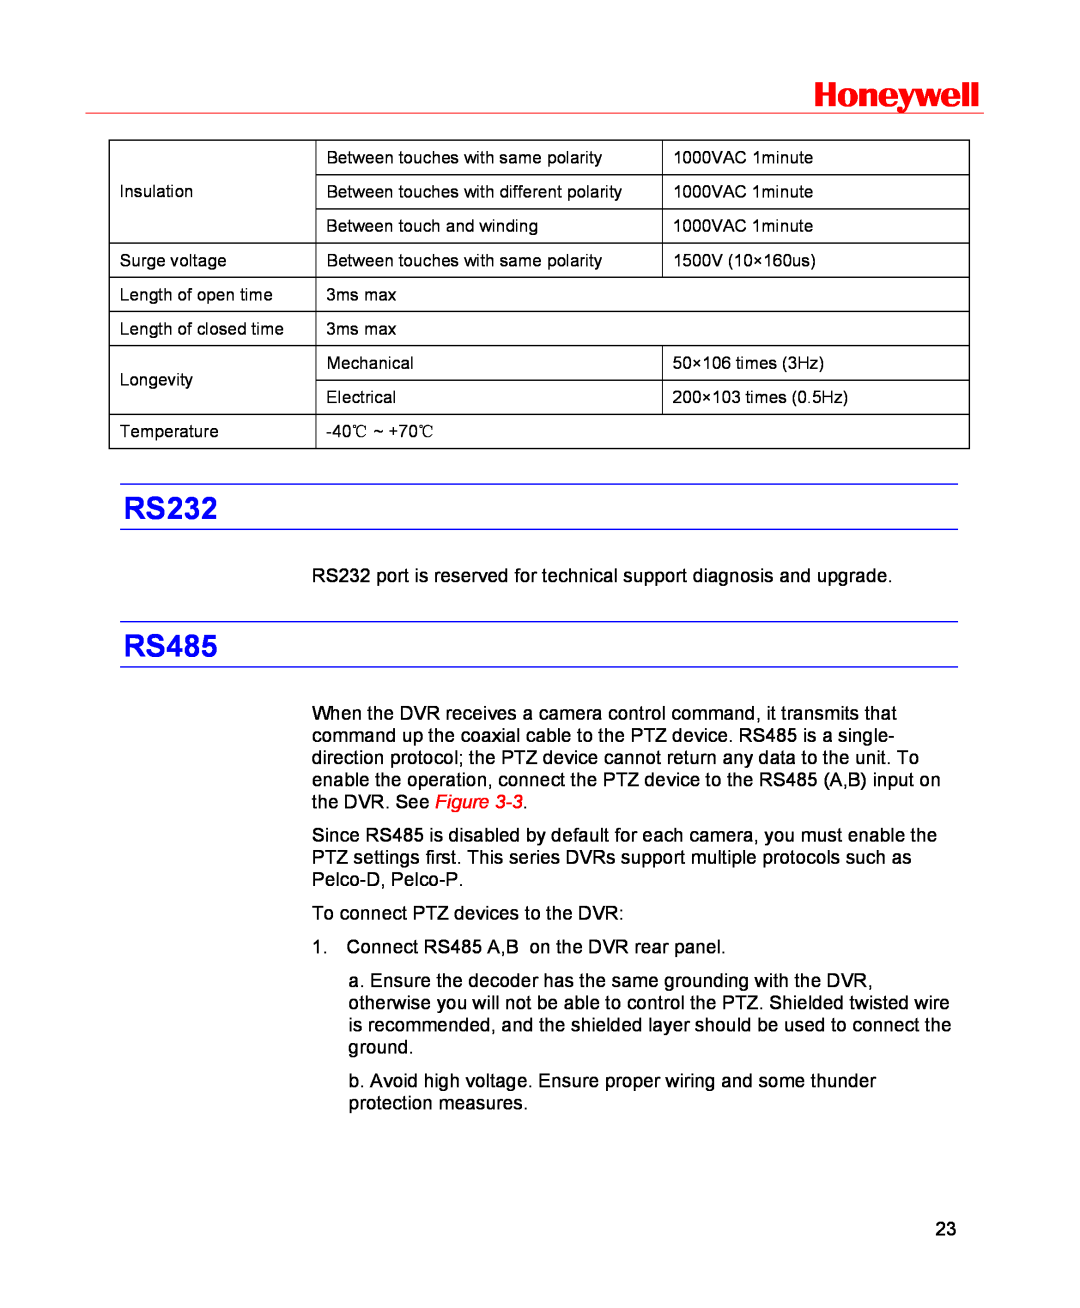 Honeywell HSVR-16, HSVR-04 user manual RS232, RS485, Honeywell 